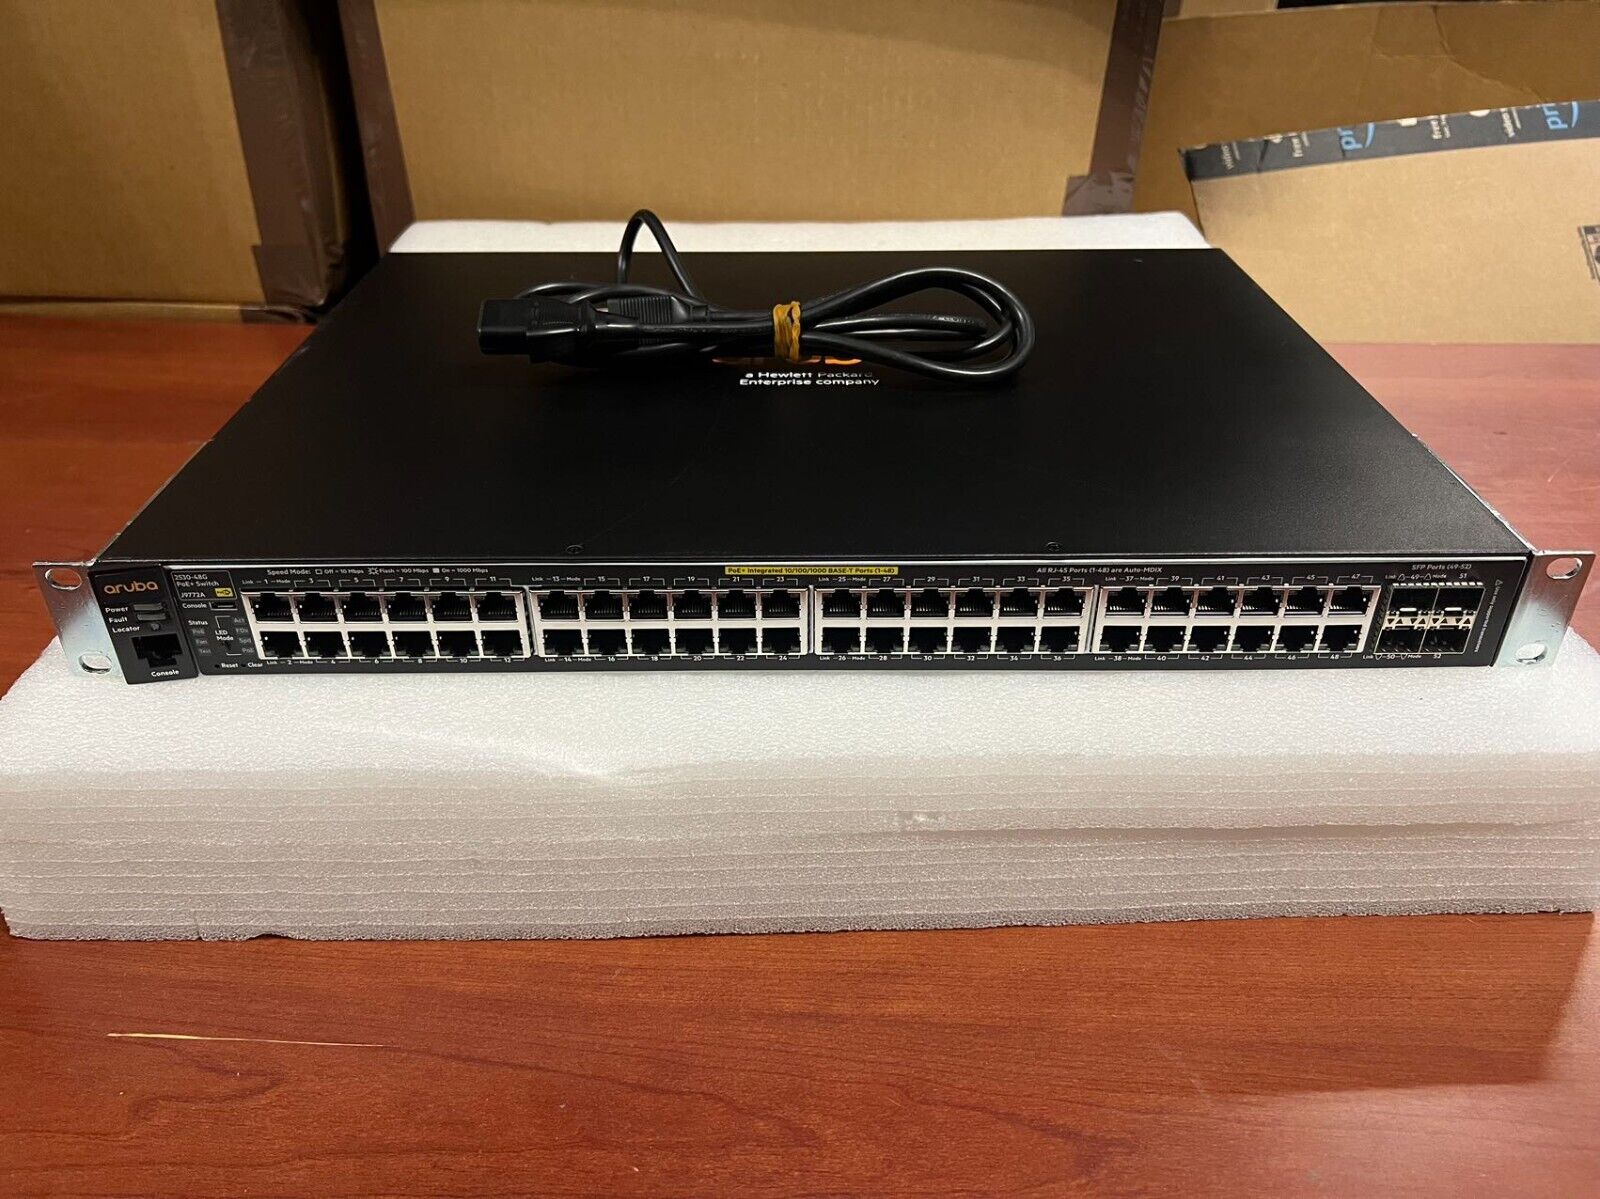 HP Aruba 2530-48G-PoE+ J9772A 48 Port PoE Gigabit Switch